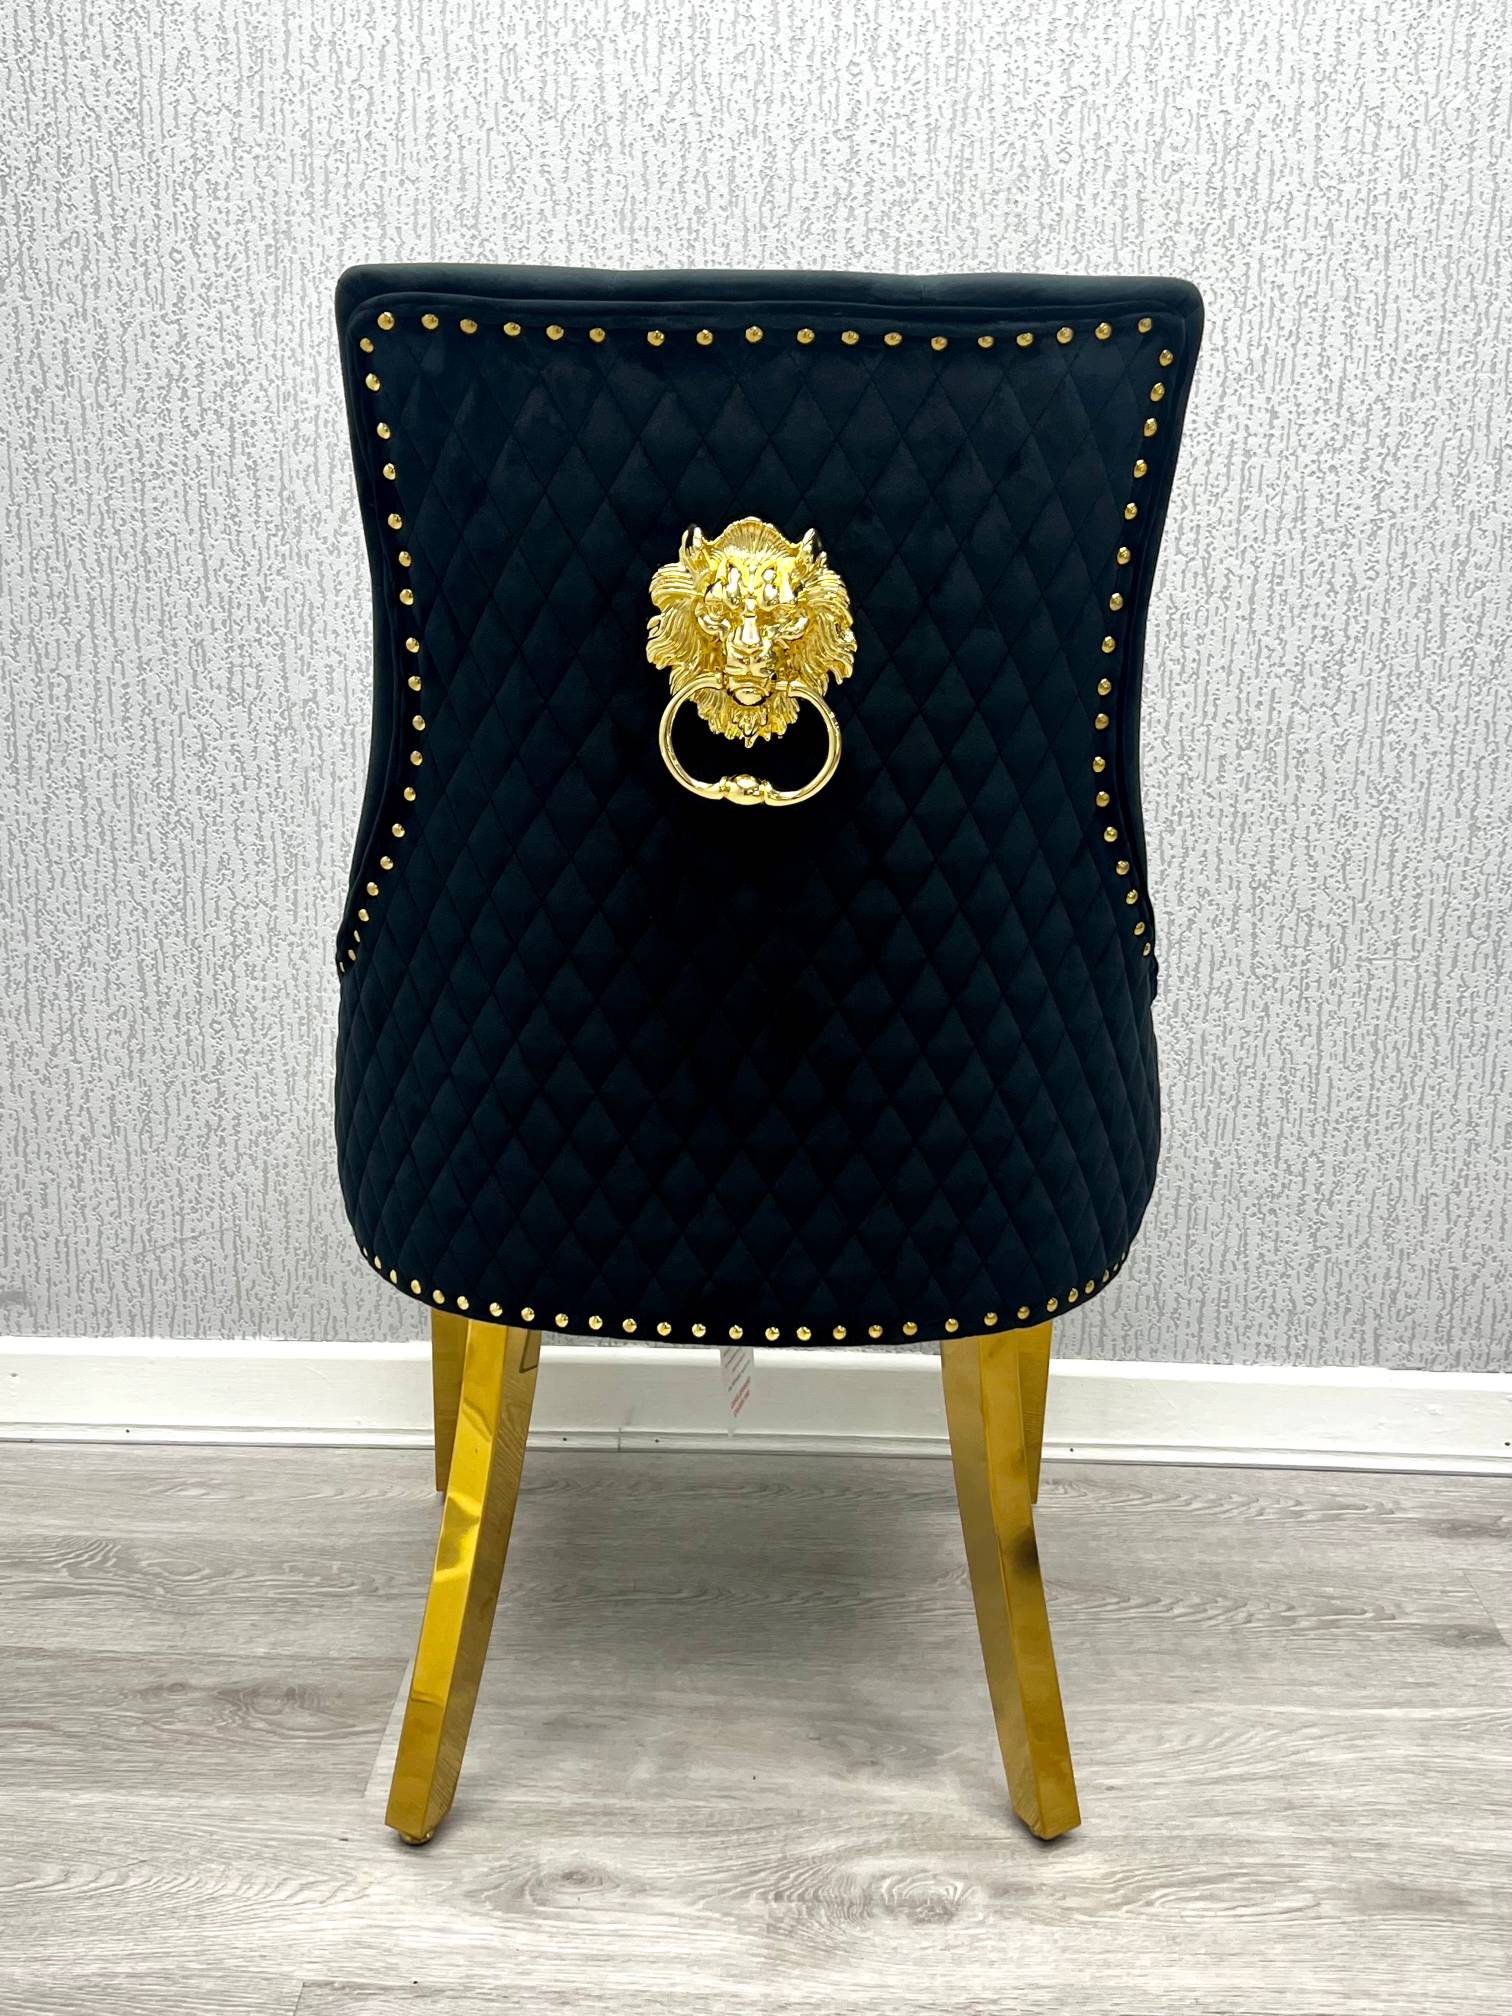 Majestic Lion Knocker Chair